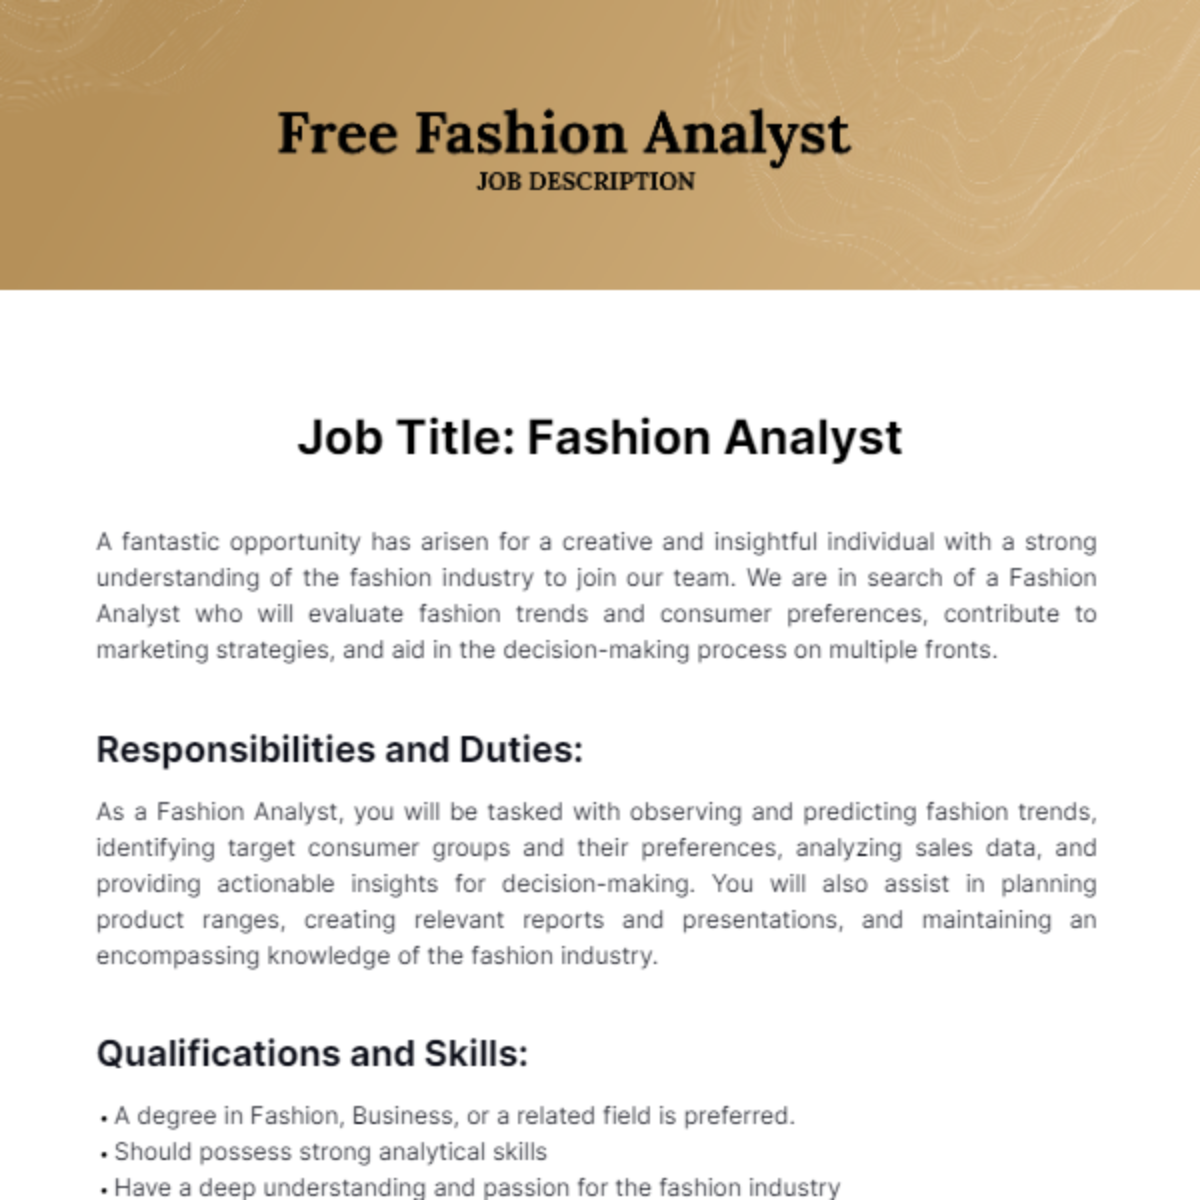 Free Fashion Analyst Job Description Template